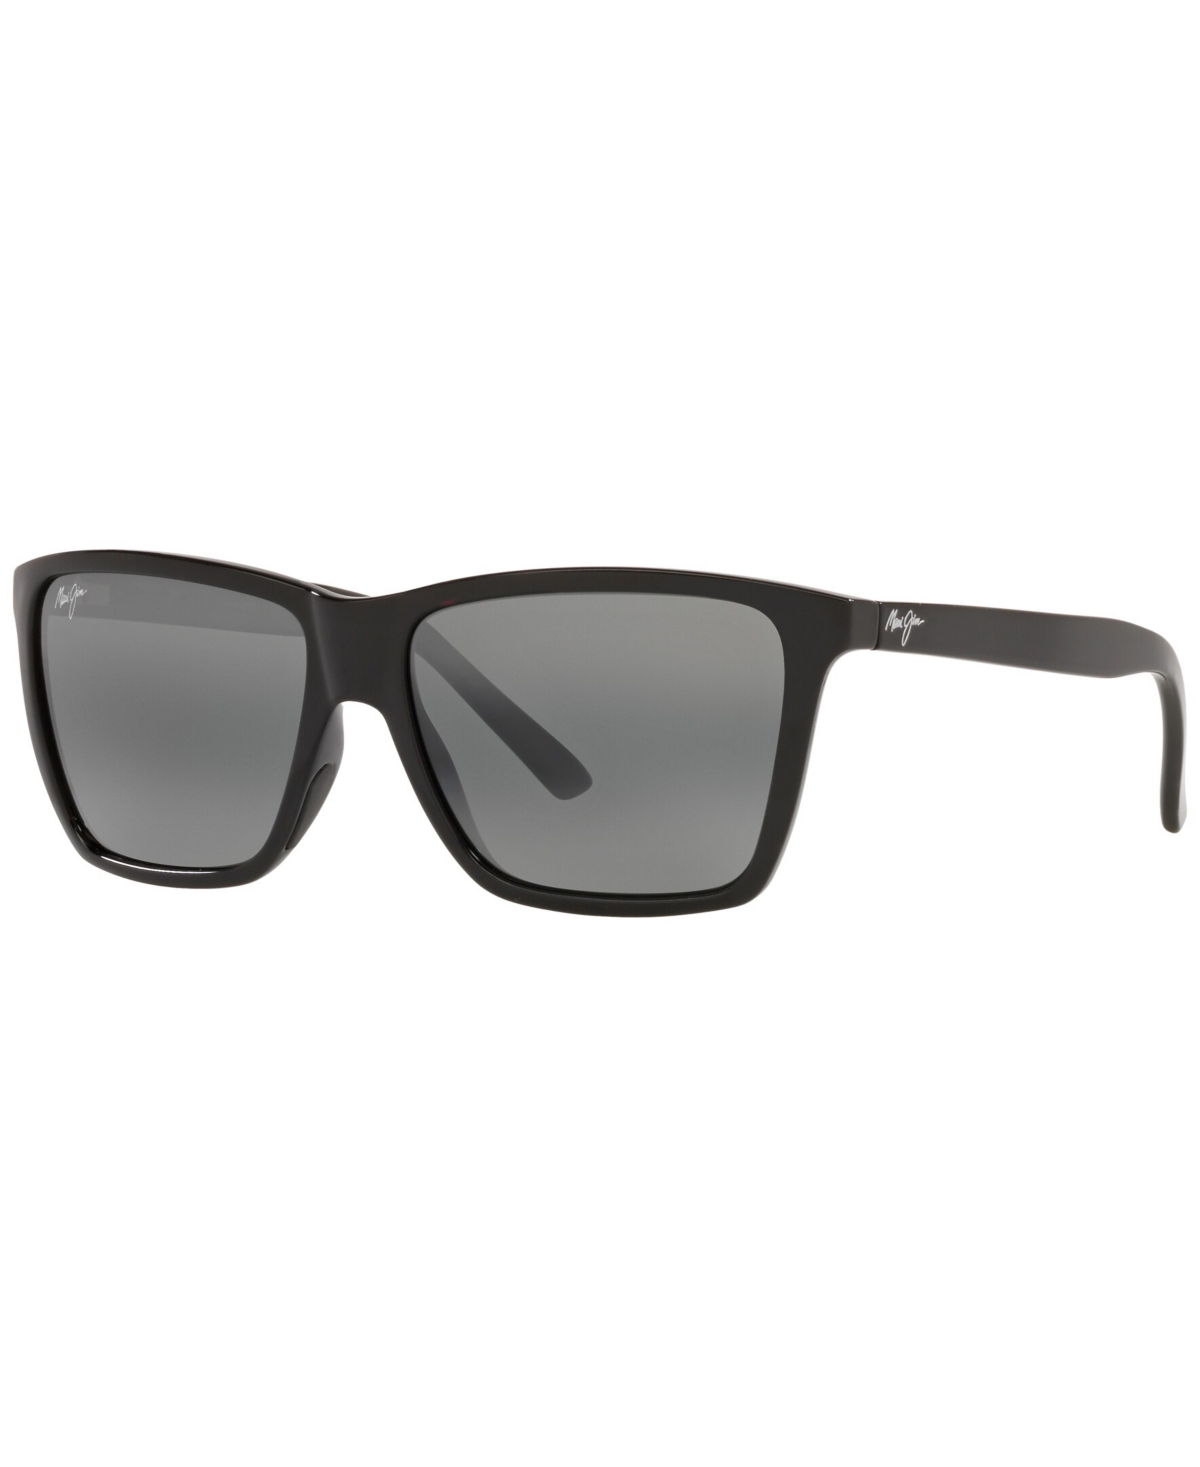 Men's Polarized Sunglasses, MJ000672 Cruzem 57 - Black Matte